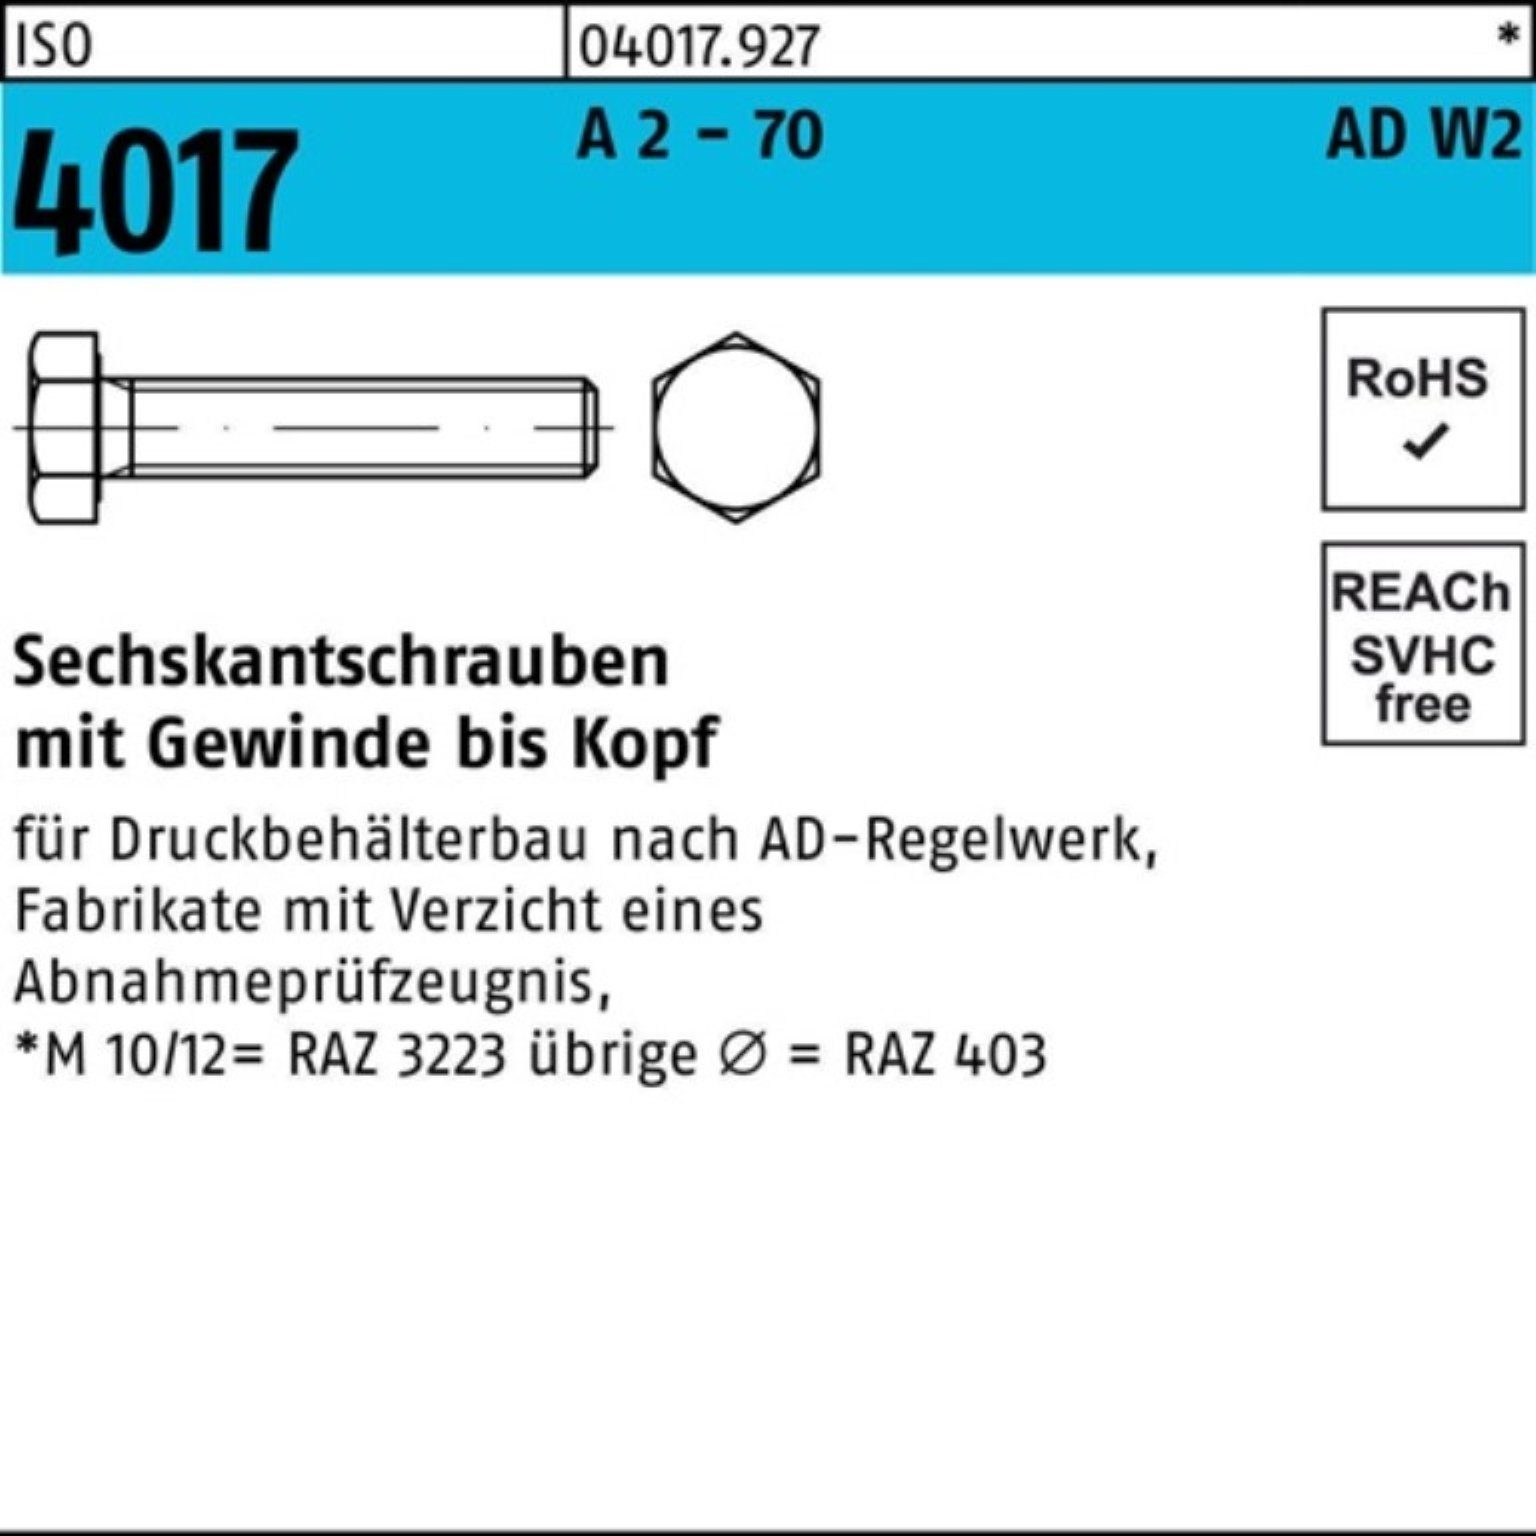 Bufab Sechskantschraube 100er Pack Sechskantschraube ISO 4017 VG M16x 110 A 2 - 70 AD-W2 25 St